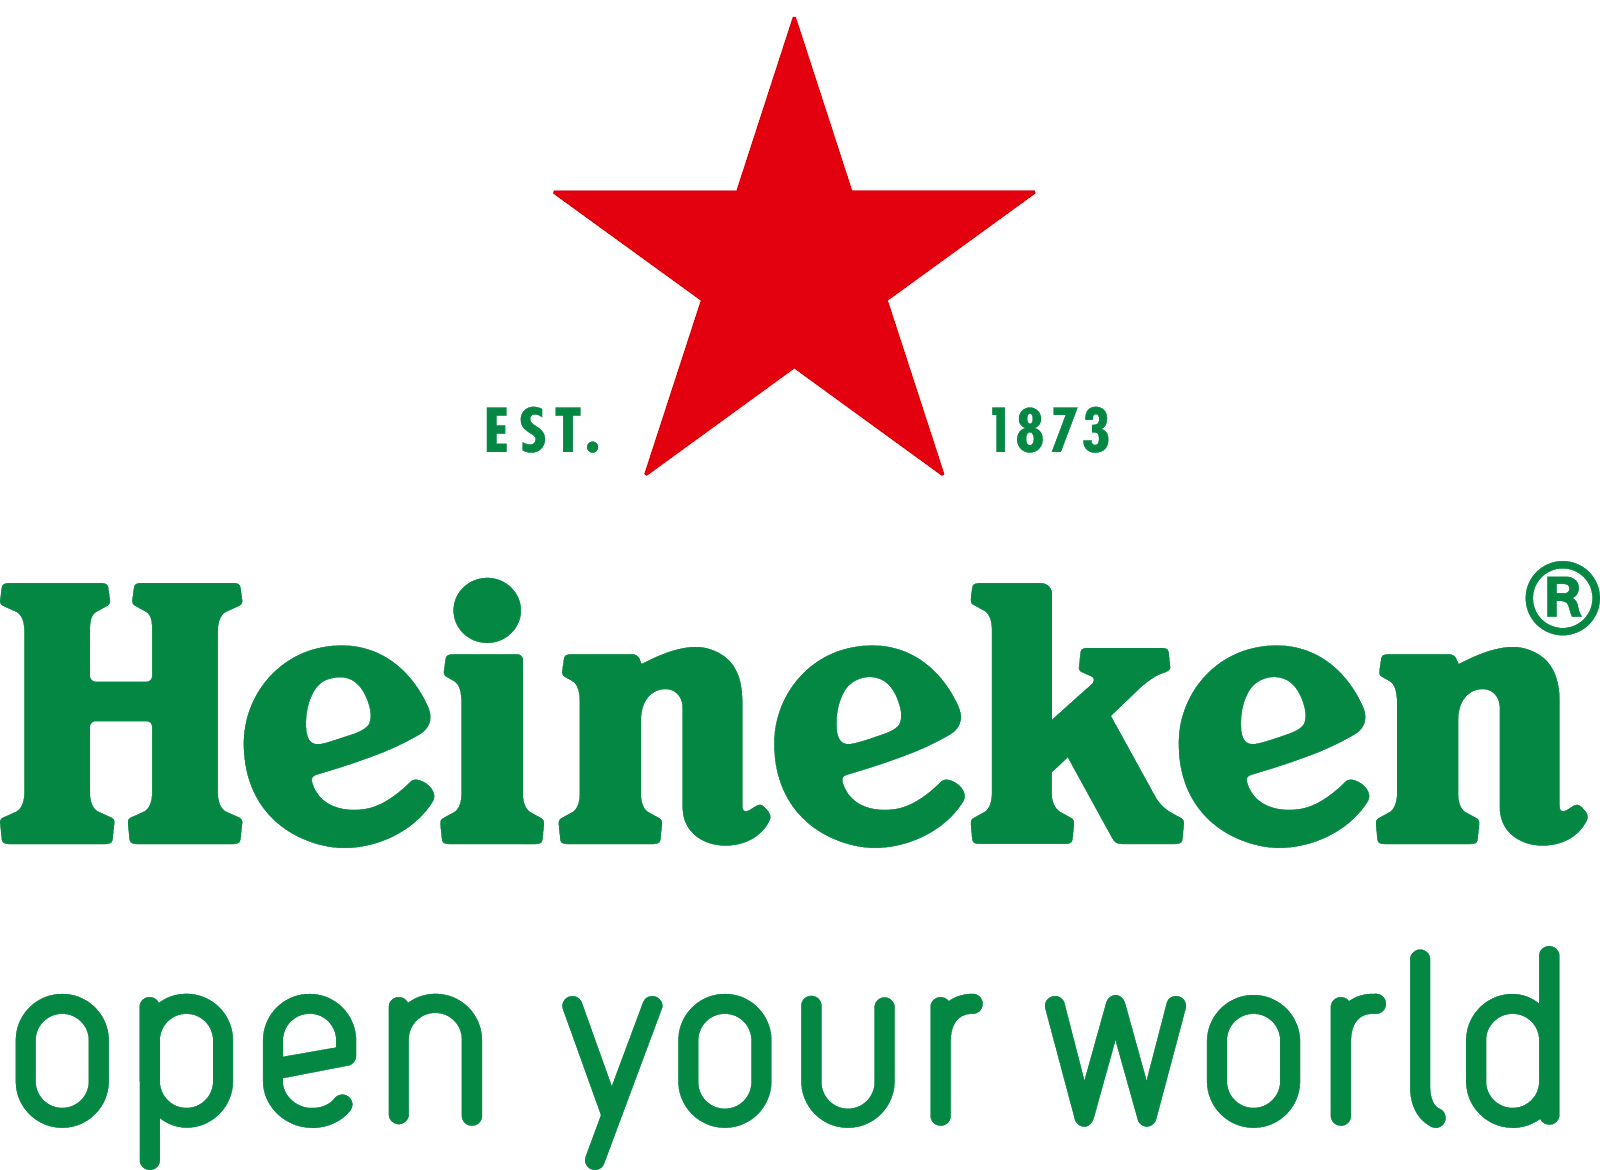  Heineken Open your world